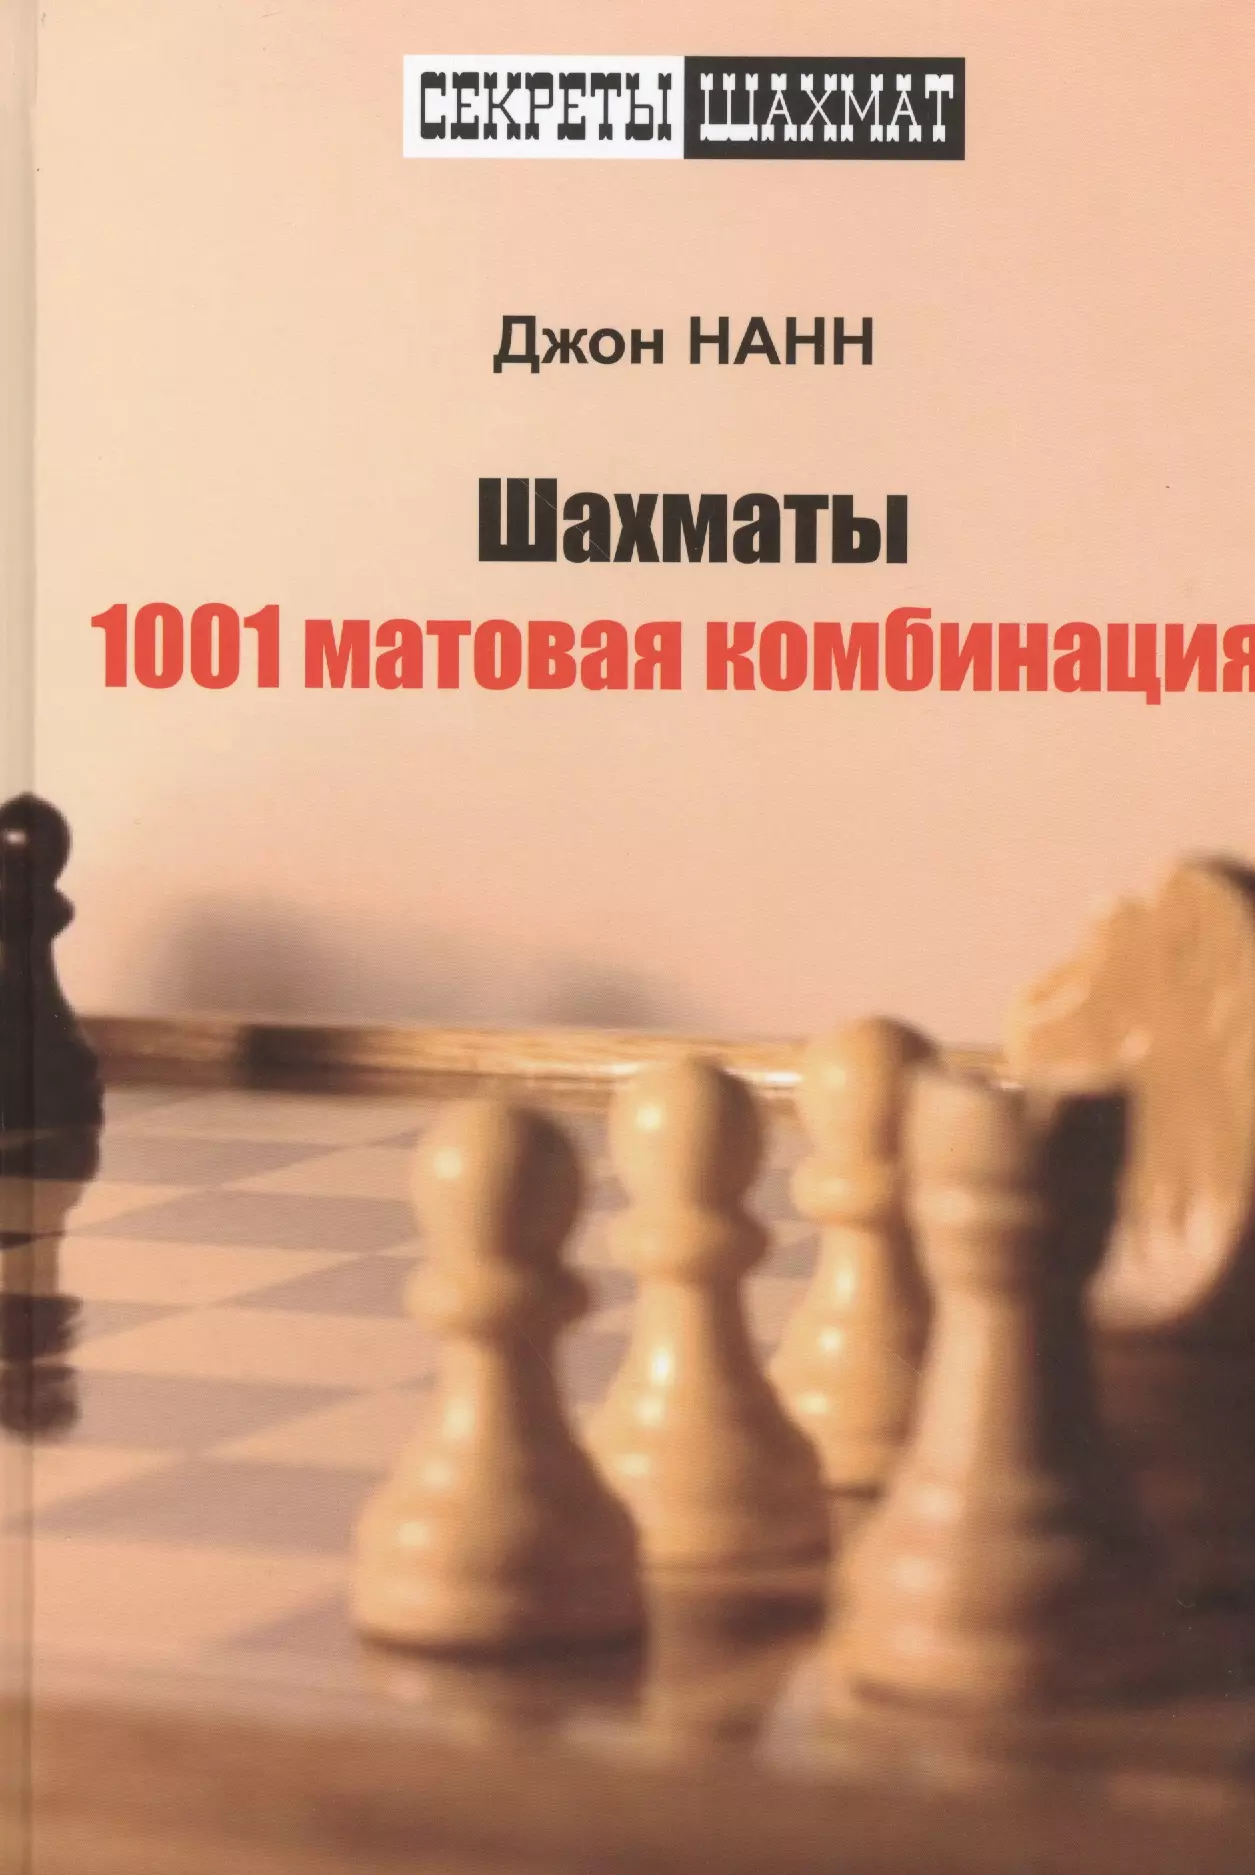 нанн джон шахматы понимание миттельшпиля Нанн Джон Шахматы. 1001 матовая комбинация